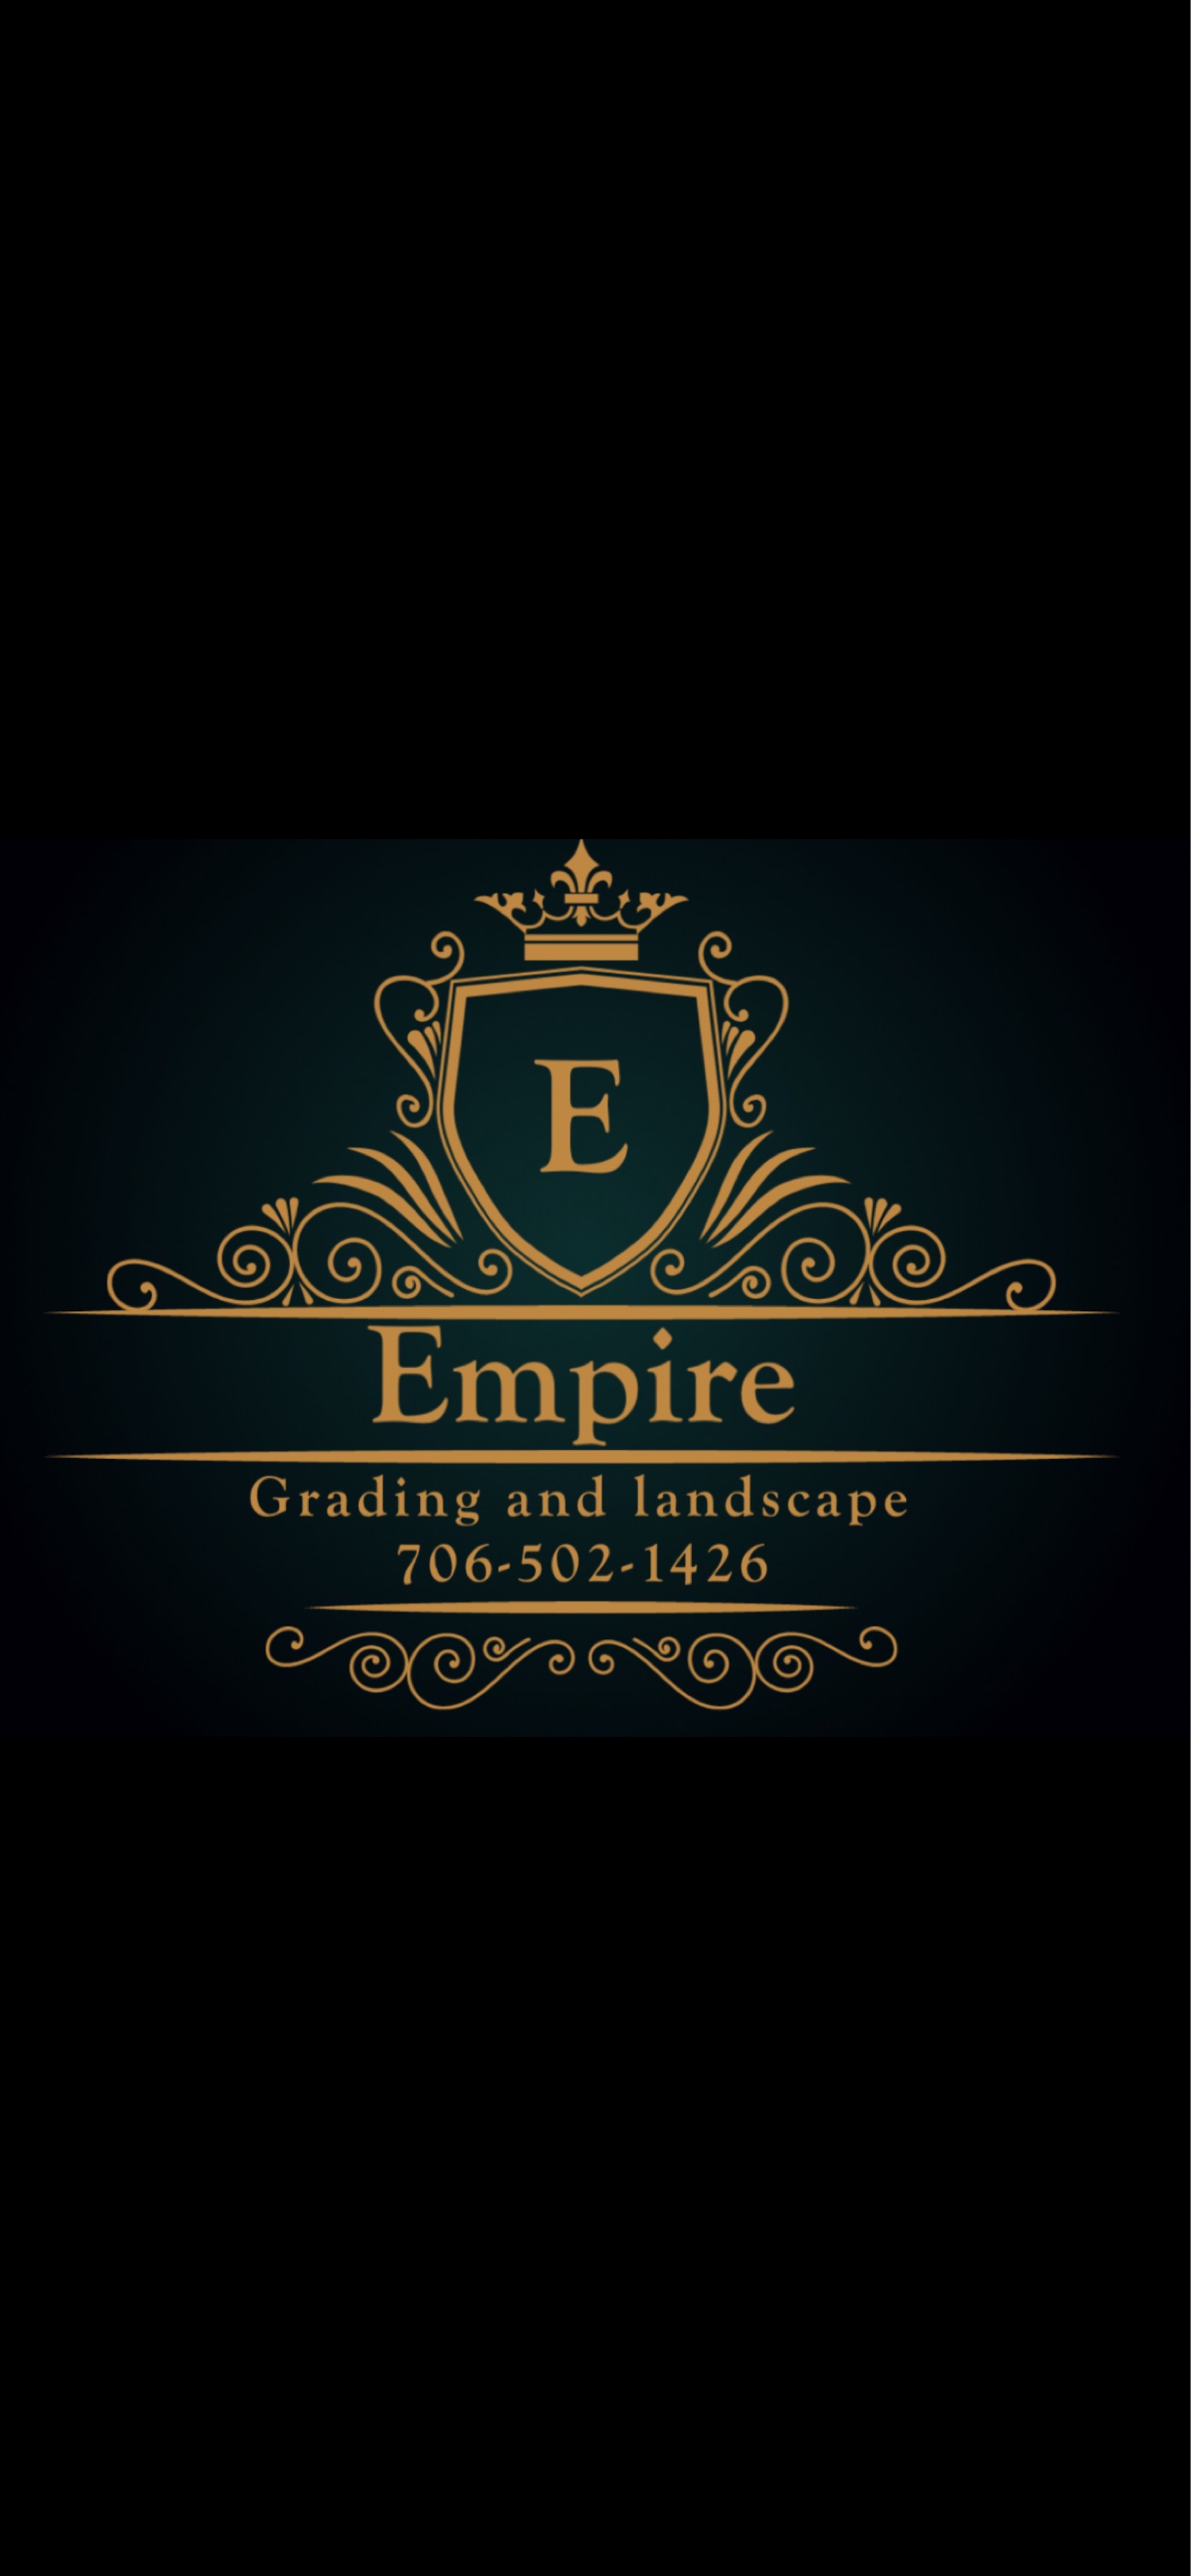 Empire Grading & Landscaping Services Logo